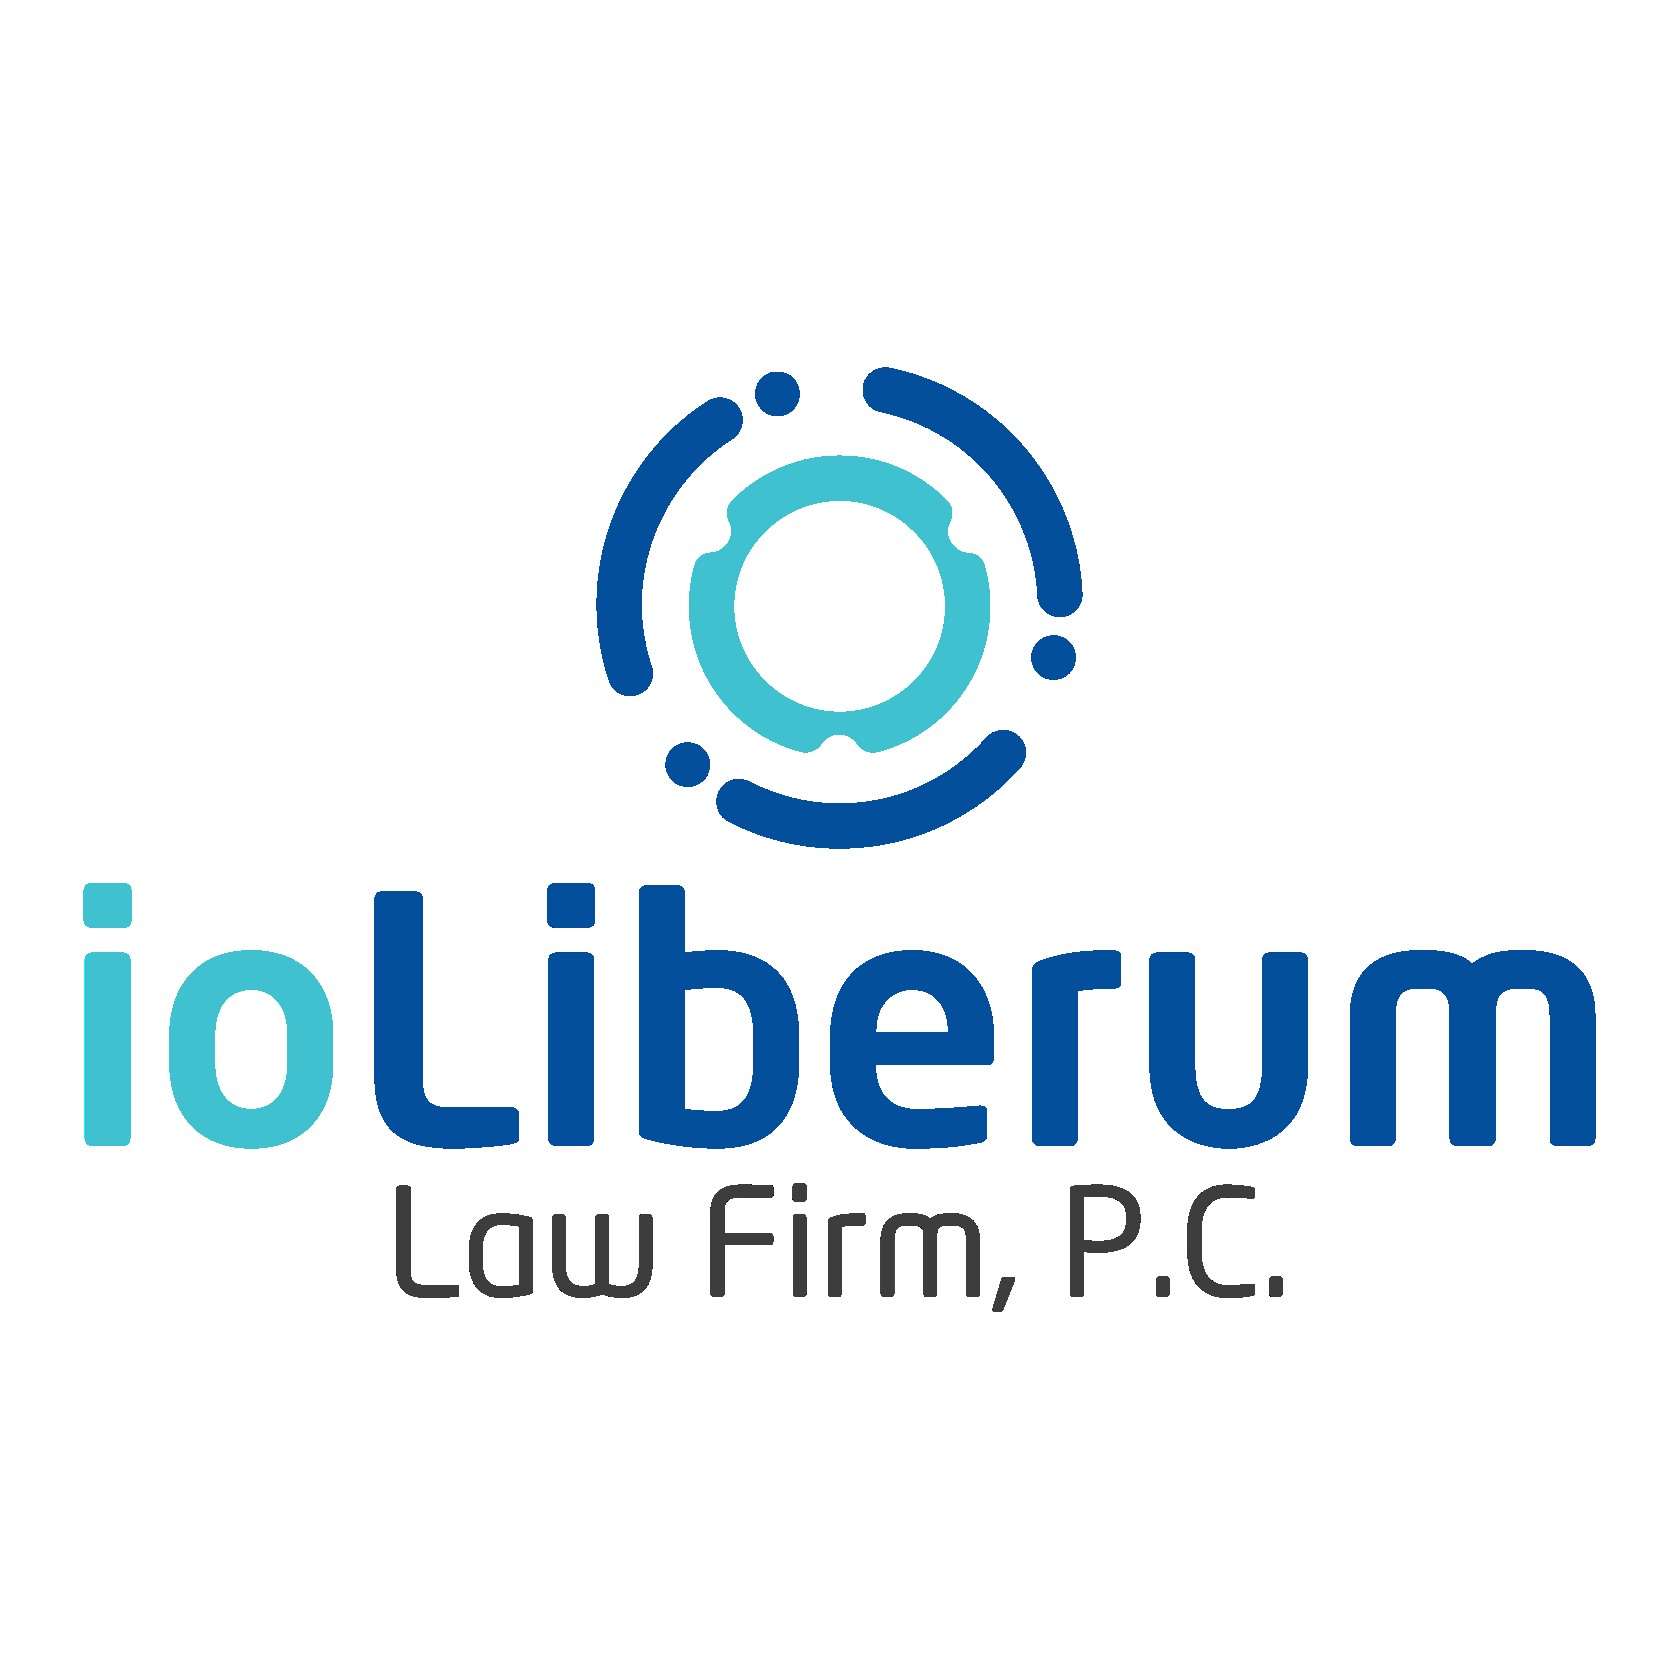 ioLiberum Law Firm, P.C.